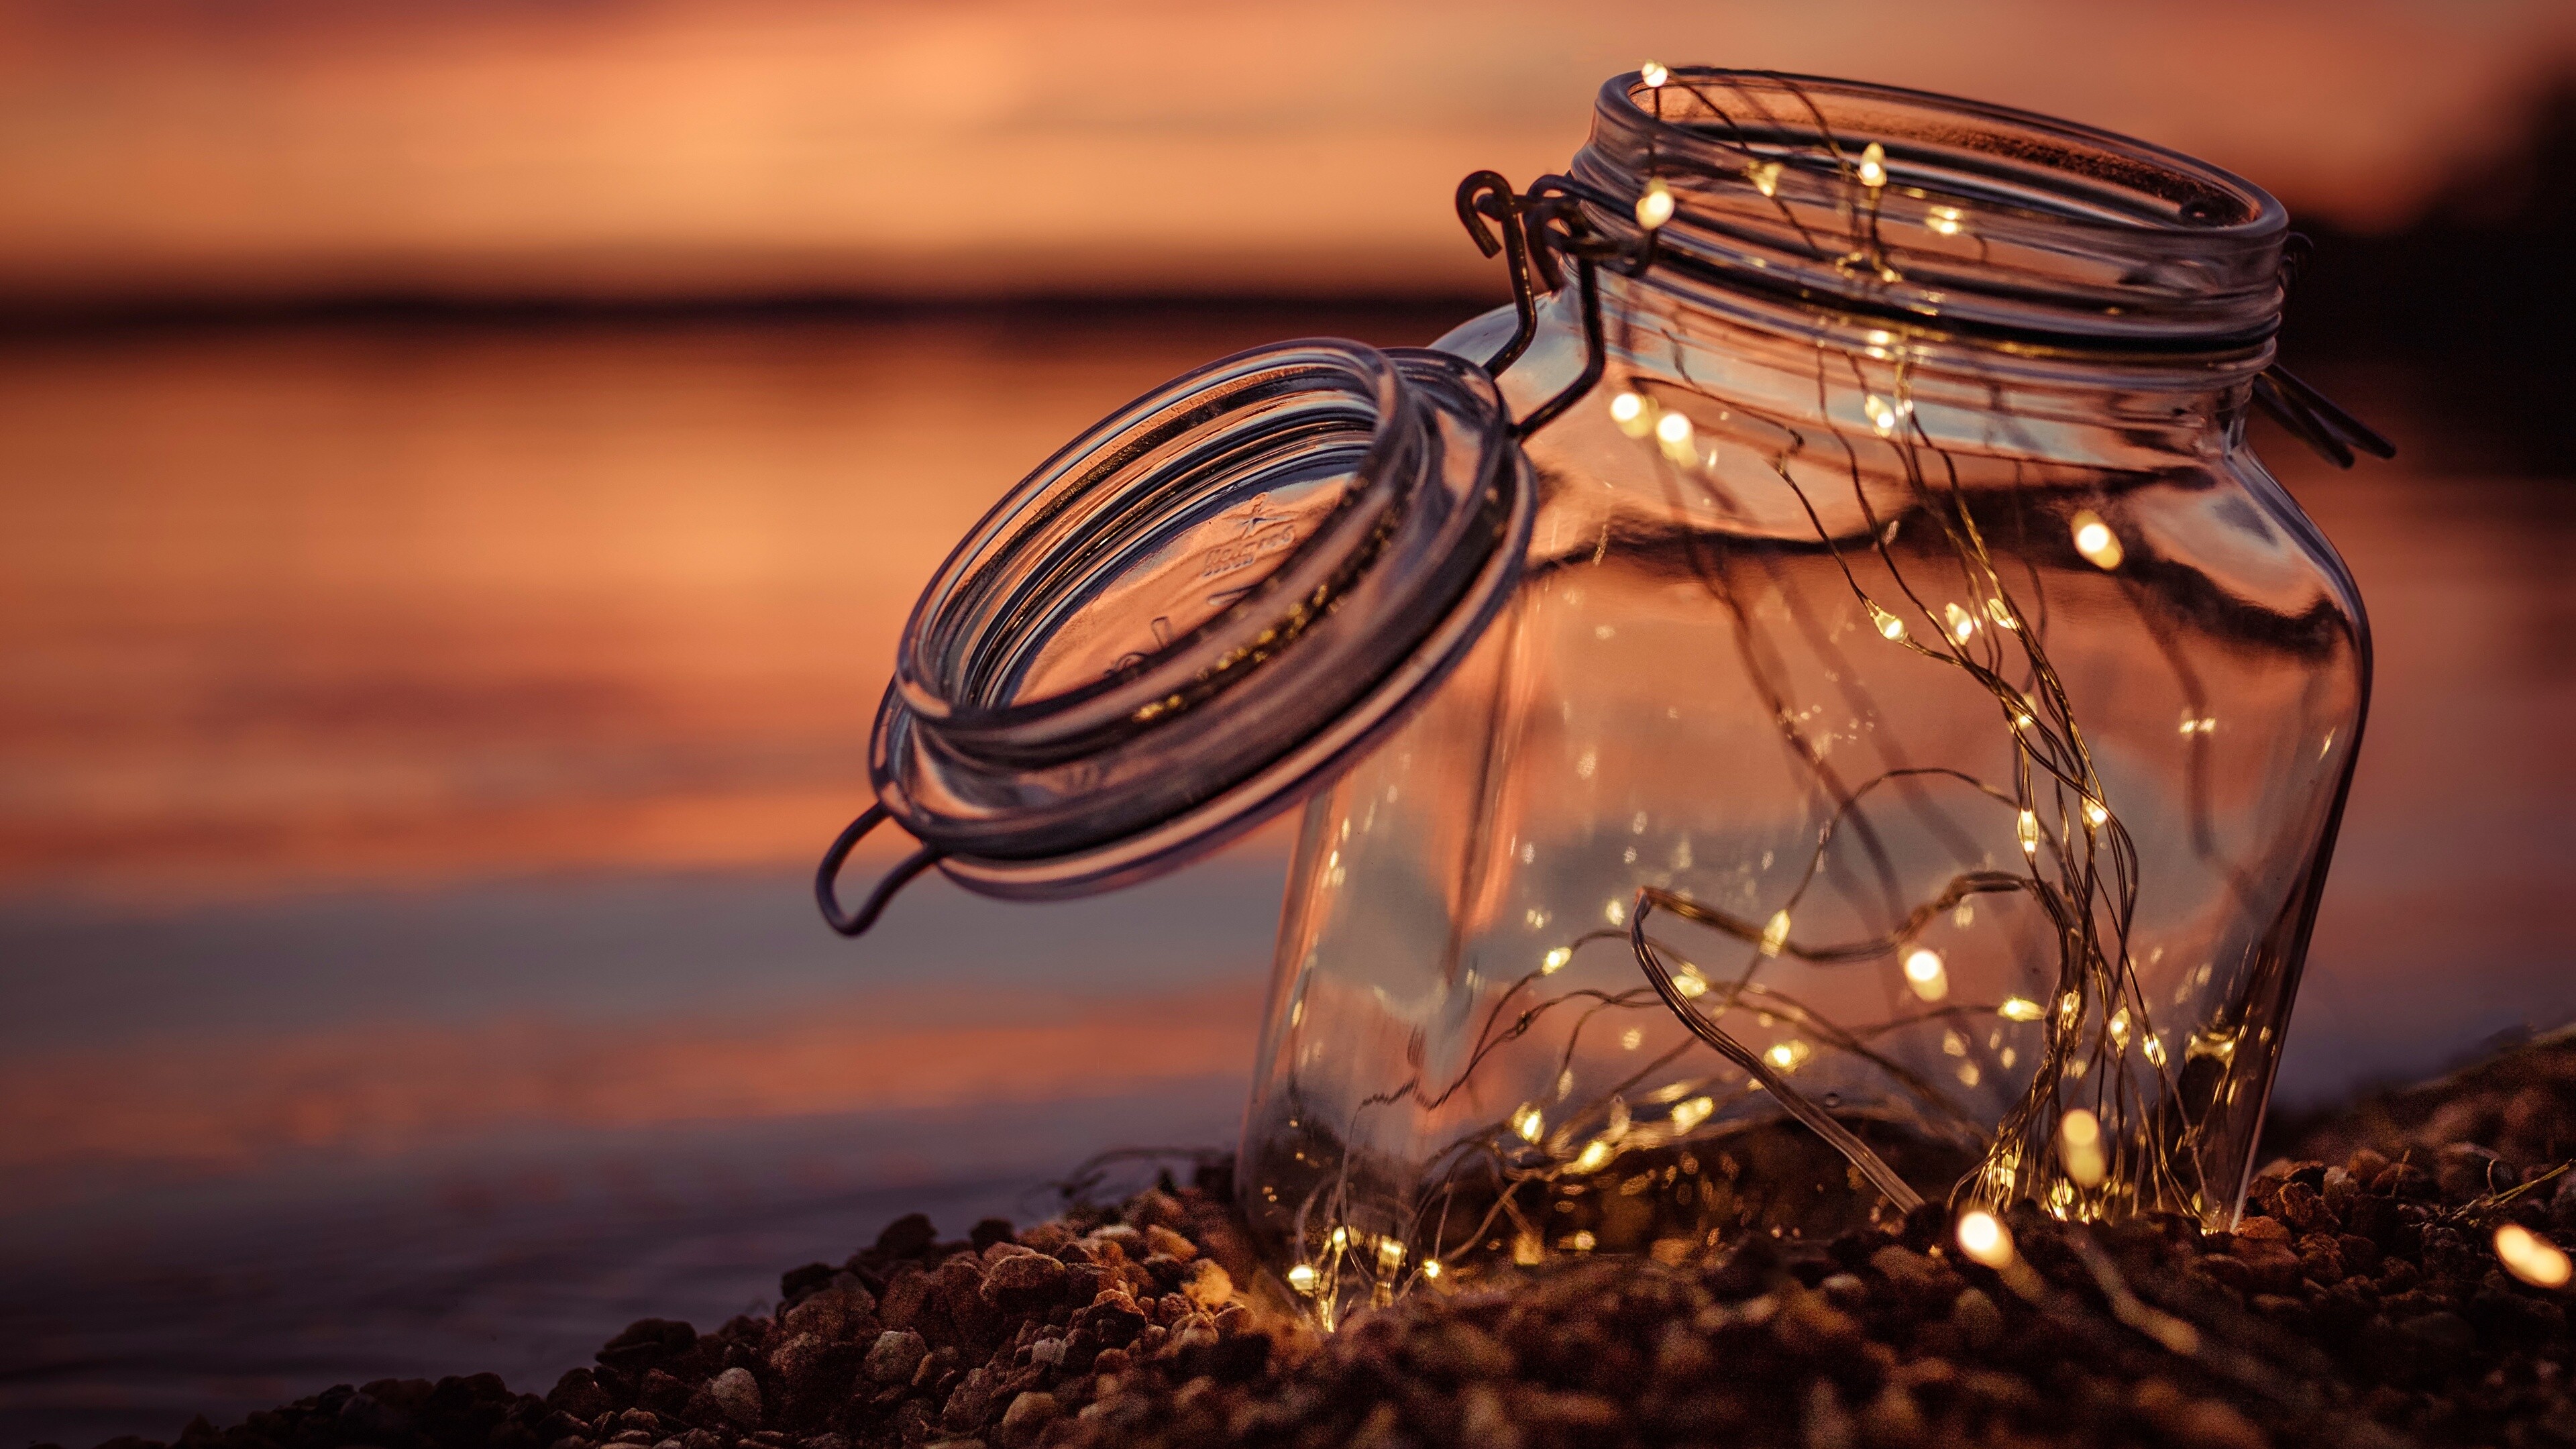 Gold Lights: Fairy lights, Mason jar lights, Warm white string lights, Seaside at sunset. 3840x2160 4K Background.